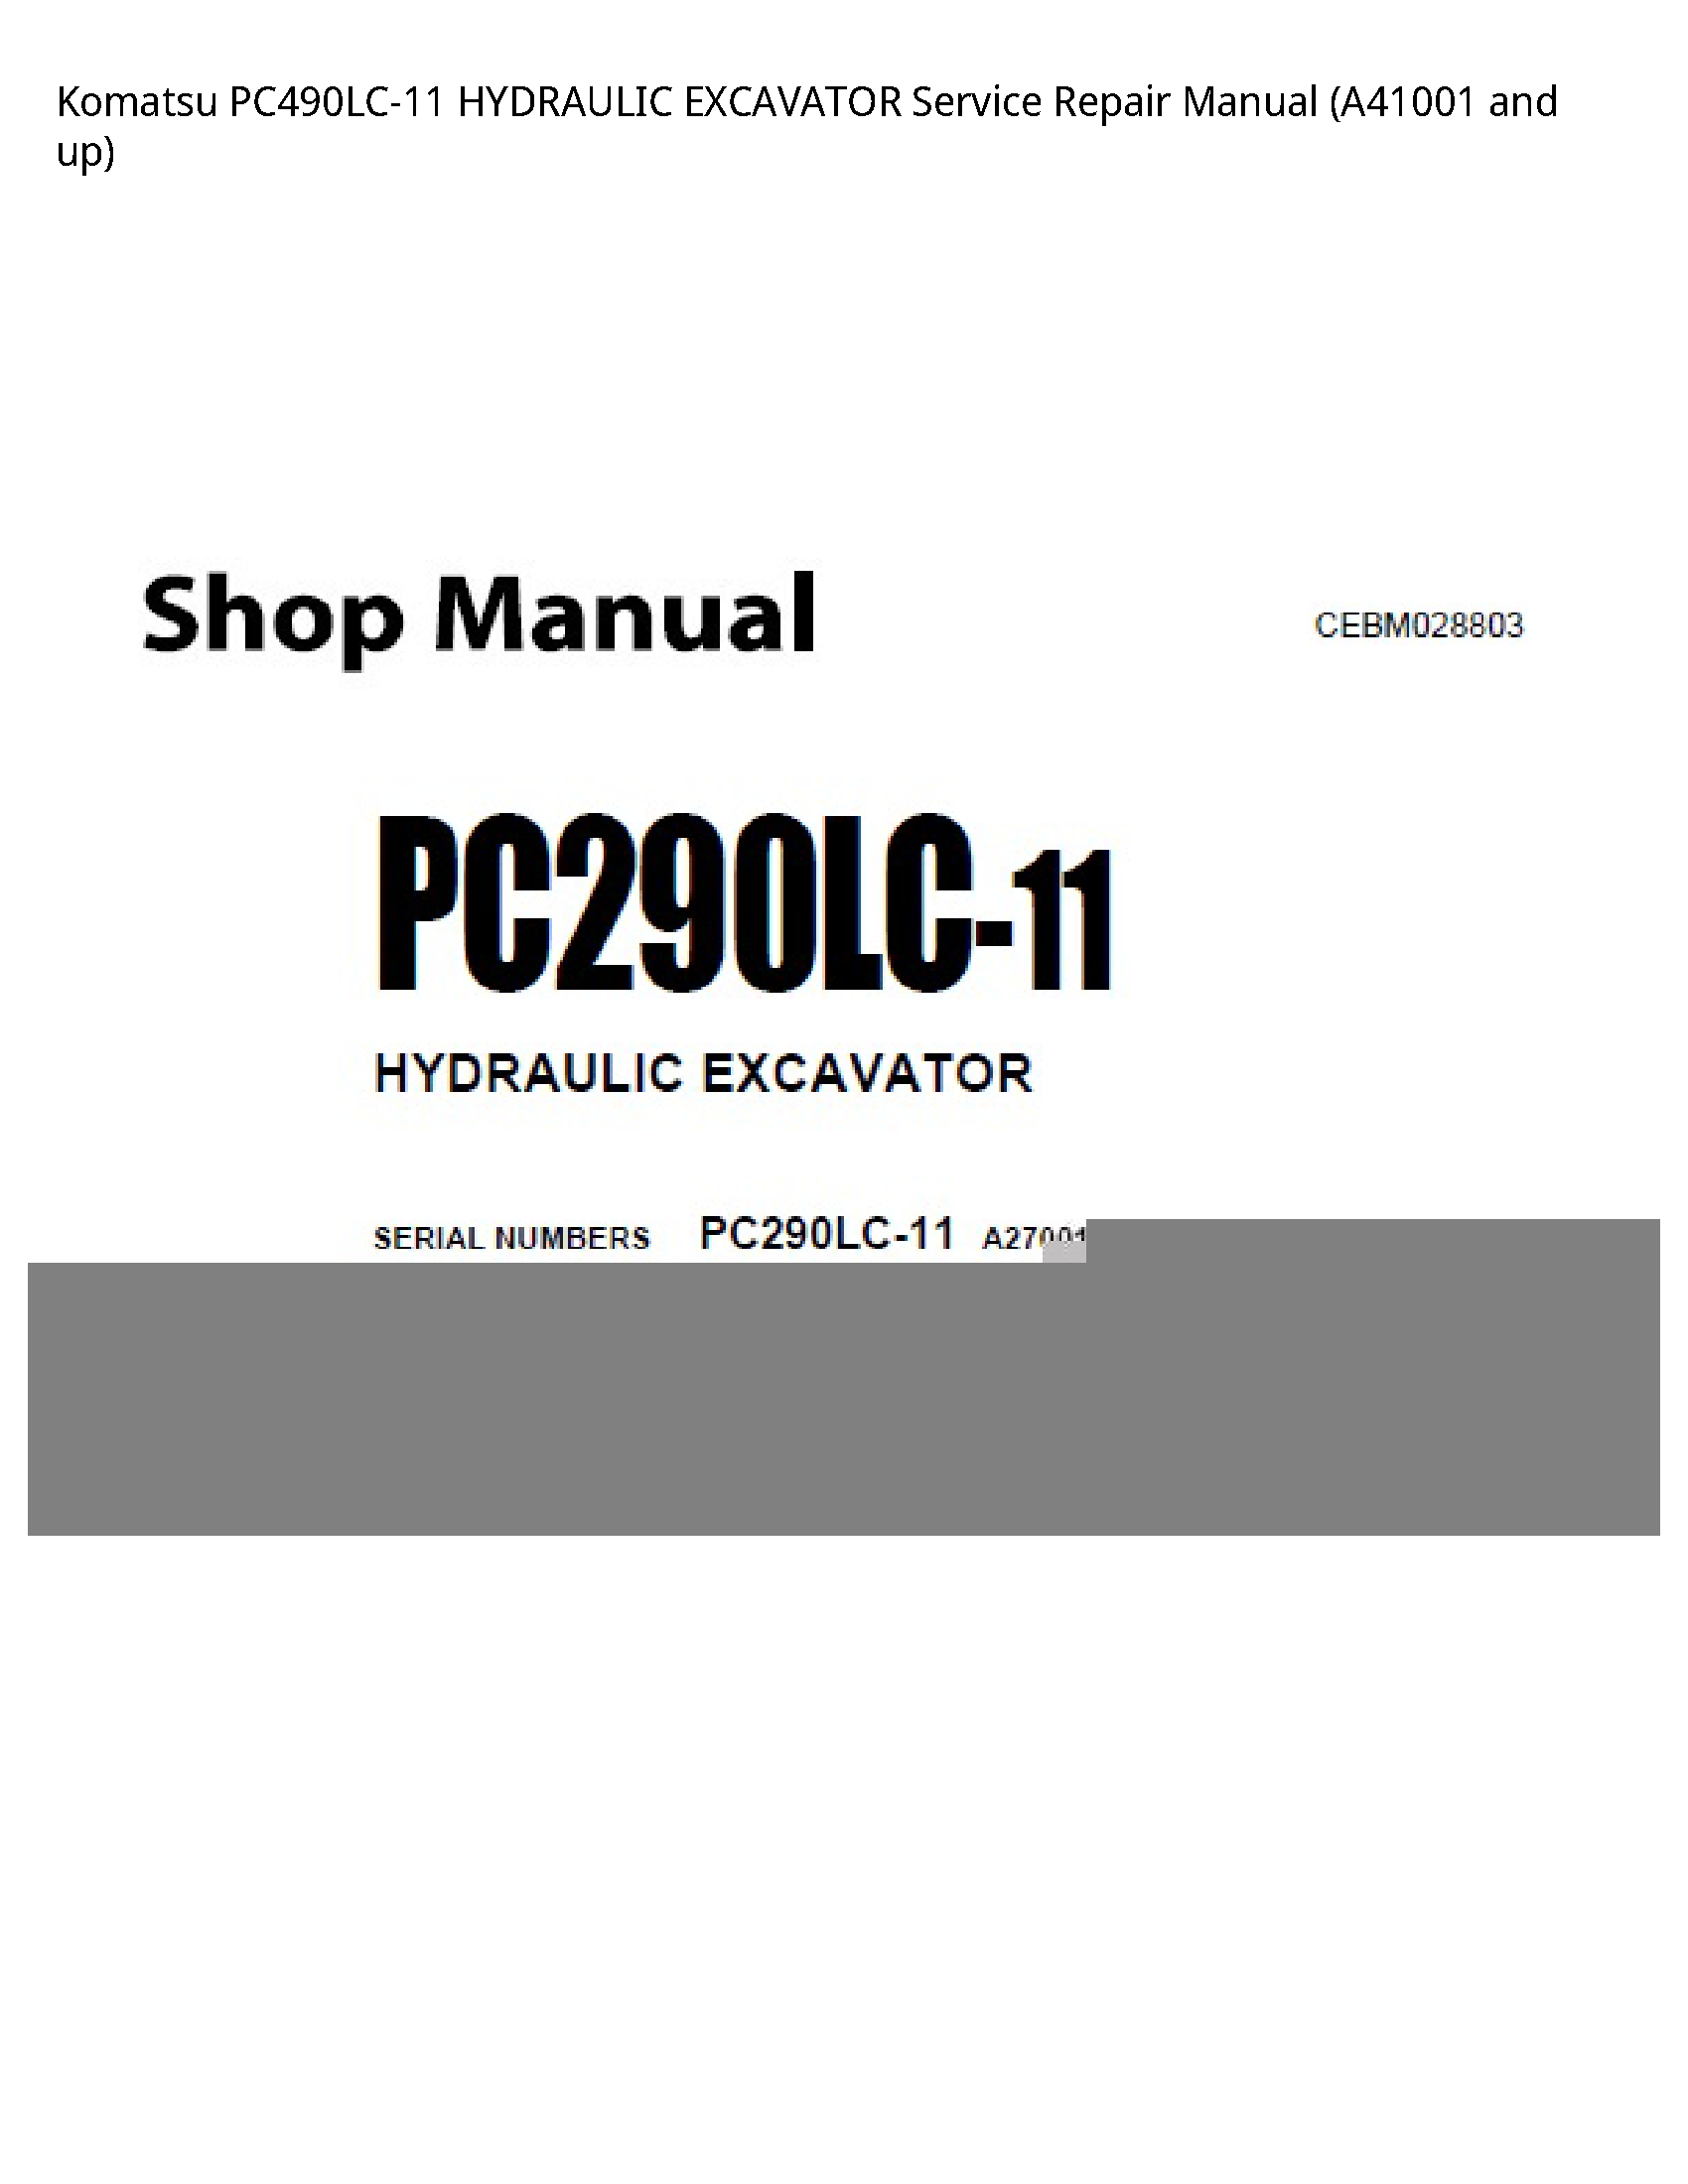 KOMATSU PC490LC-11 HYDRAULIC EXCAVATOR manual